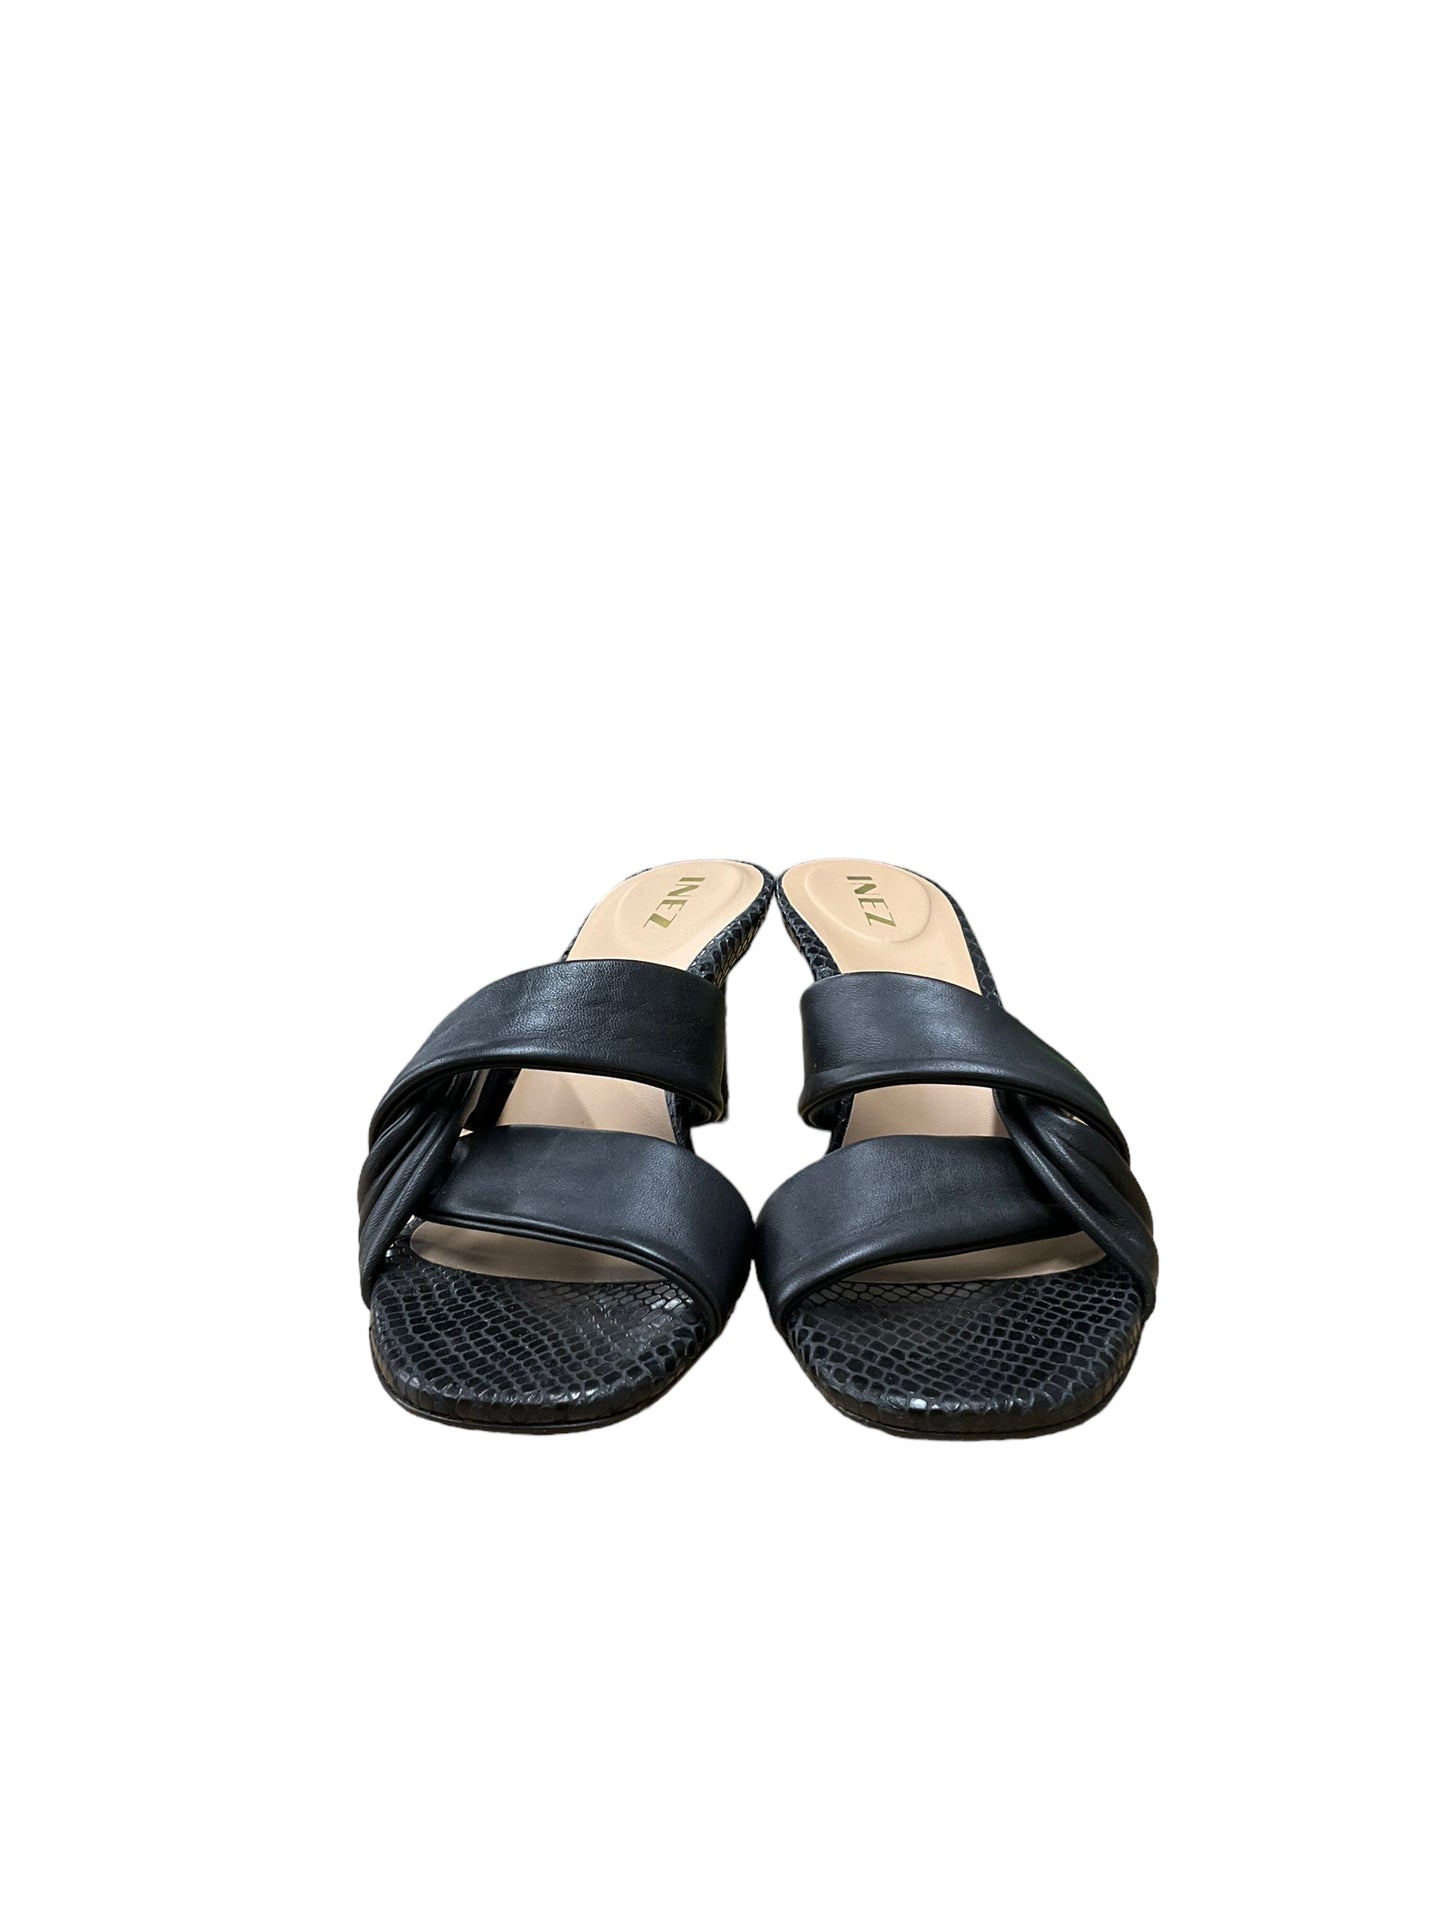 Sandals Heels Stiletto By Cma  Size: 8.5